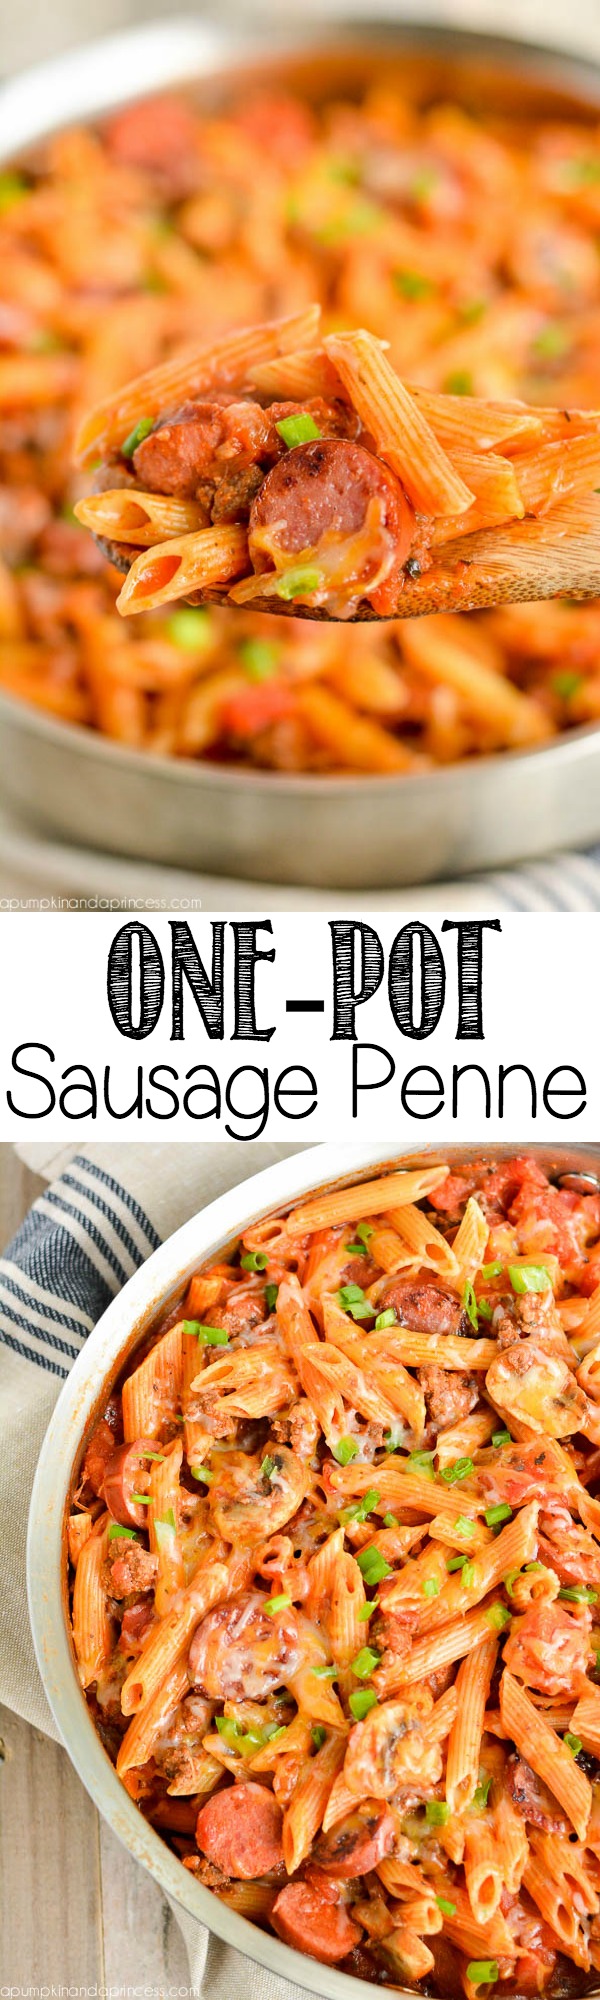 One-Pot Sausage Penne Pasta